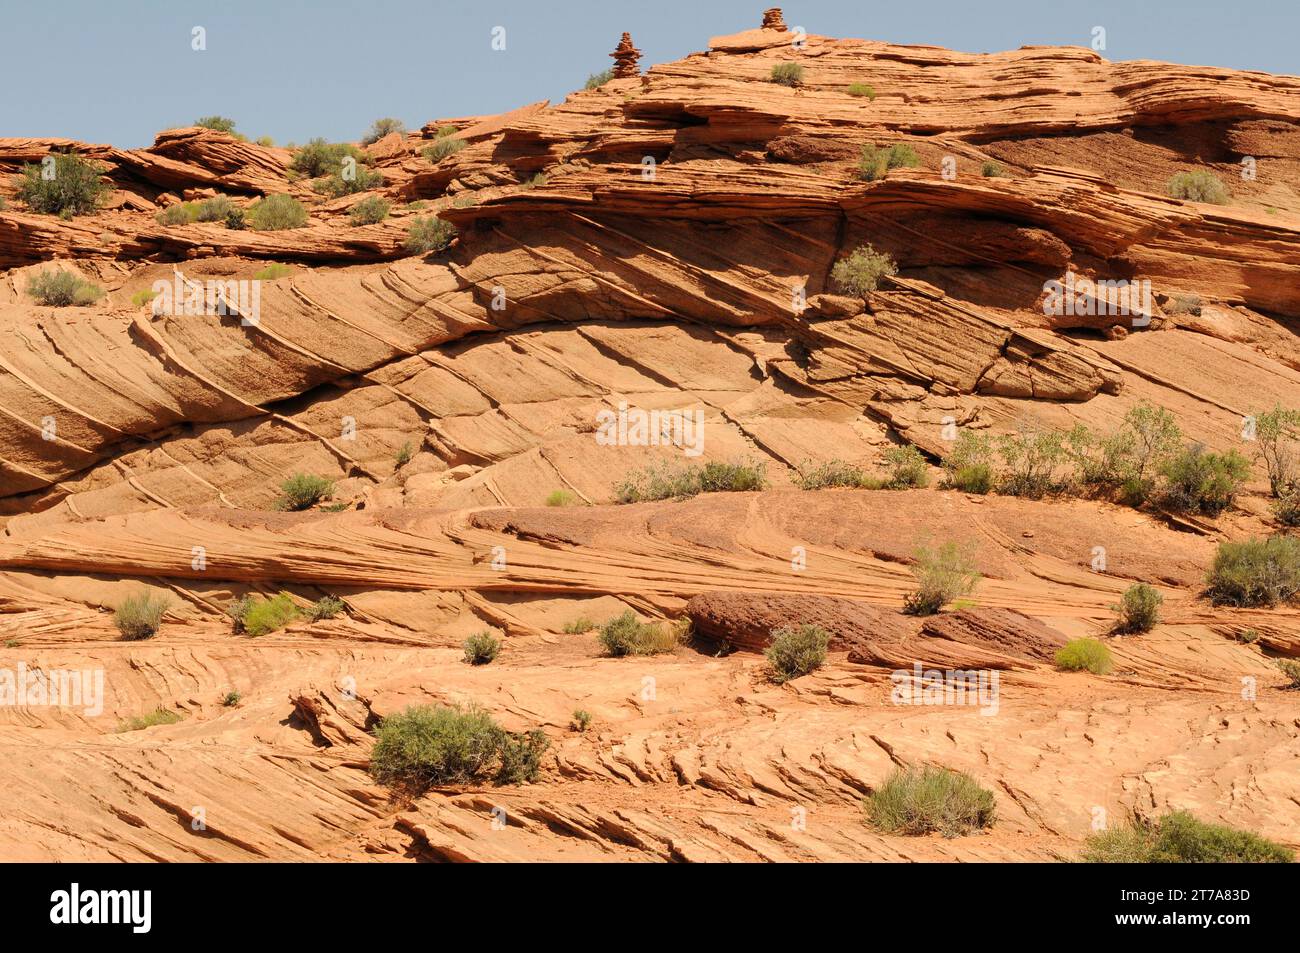 Cross-bedding sandstone. This photo was taken in Horseshoe Bend, Arizona, USA. Stock Photo